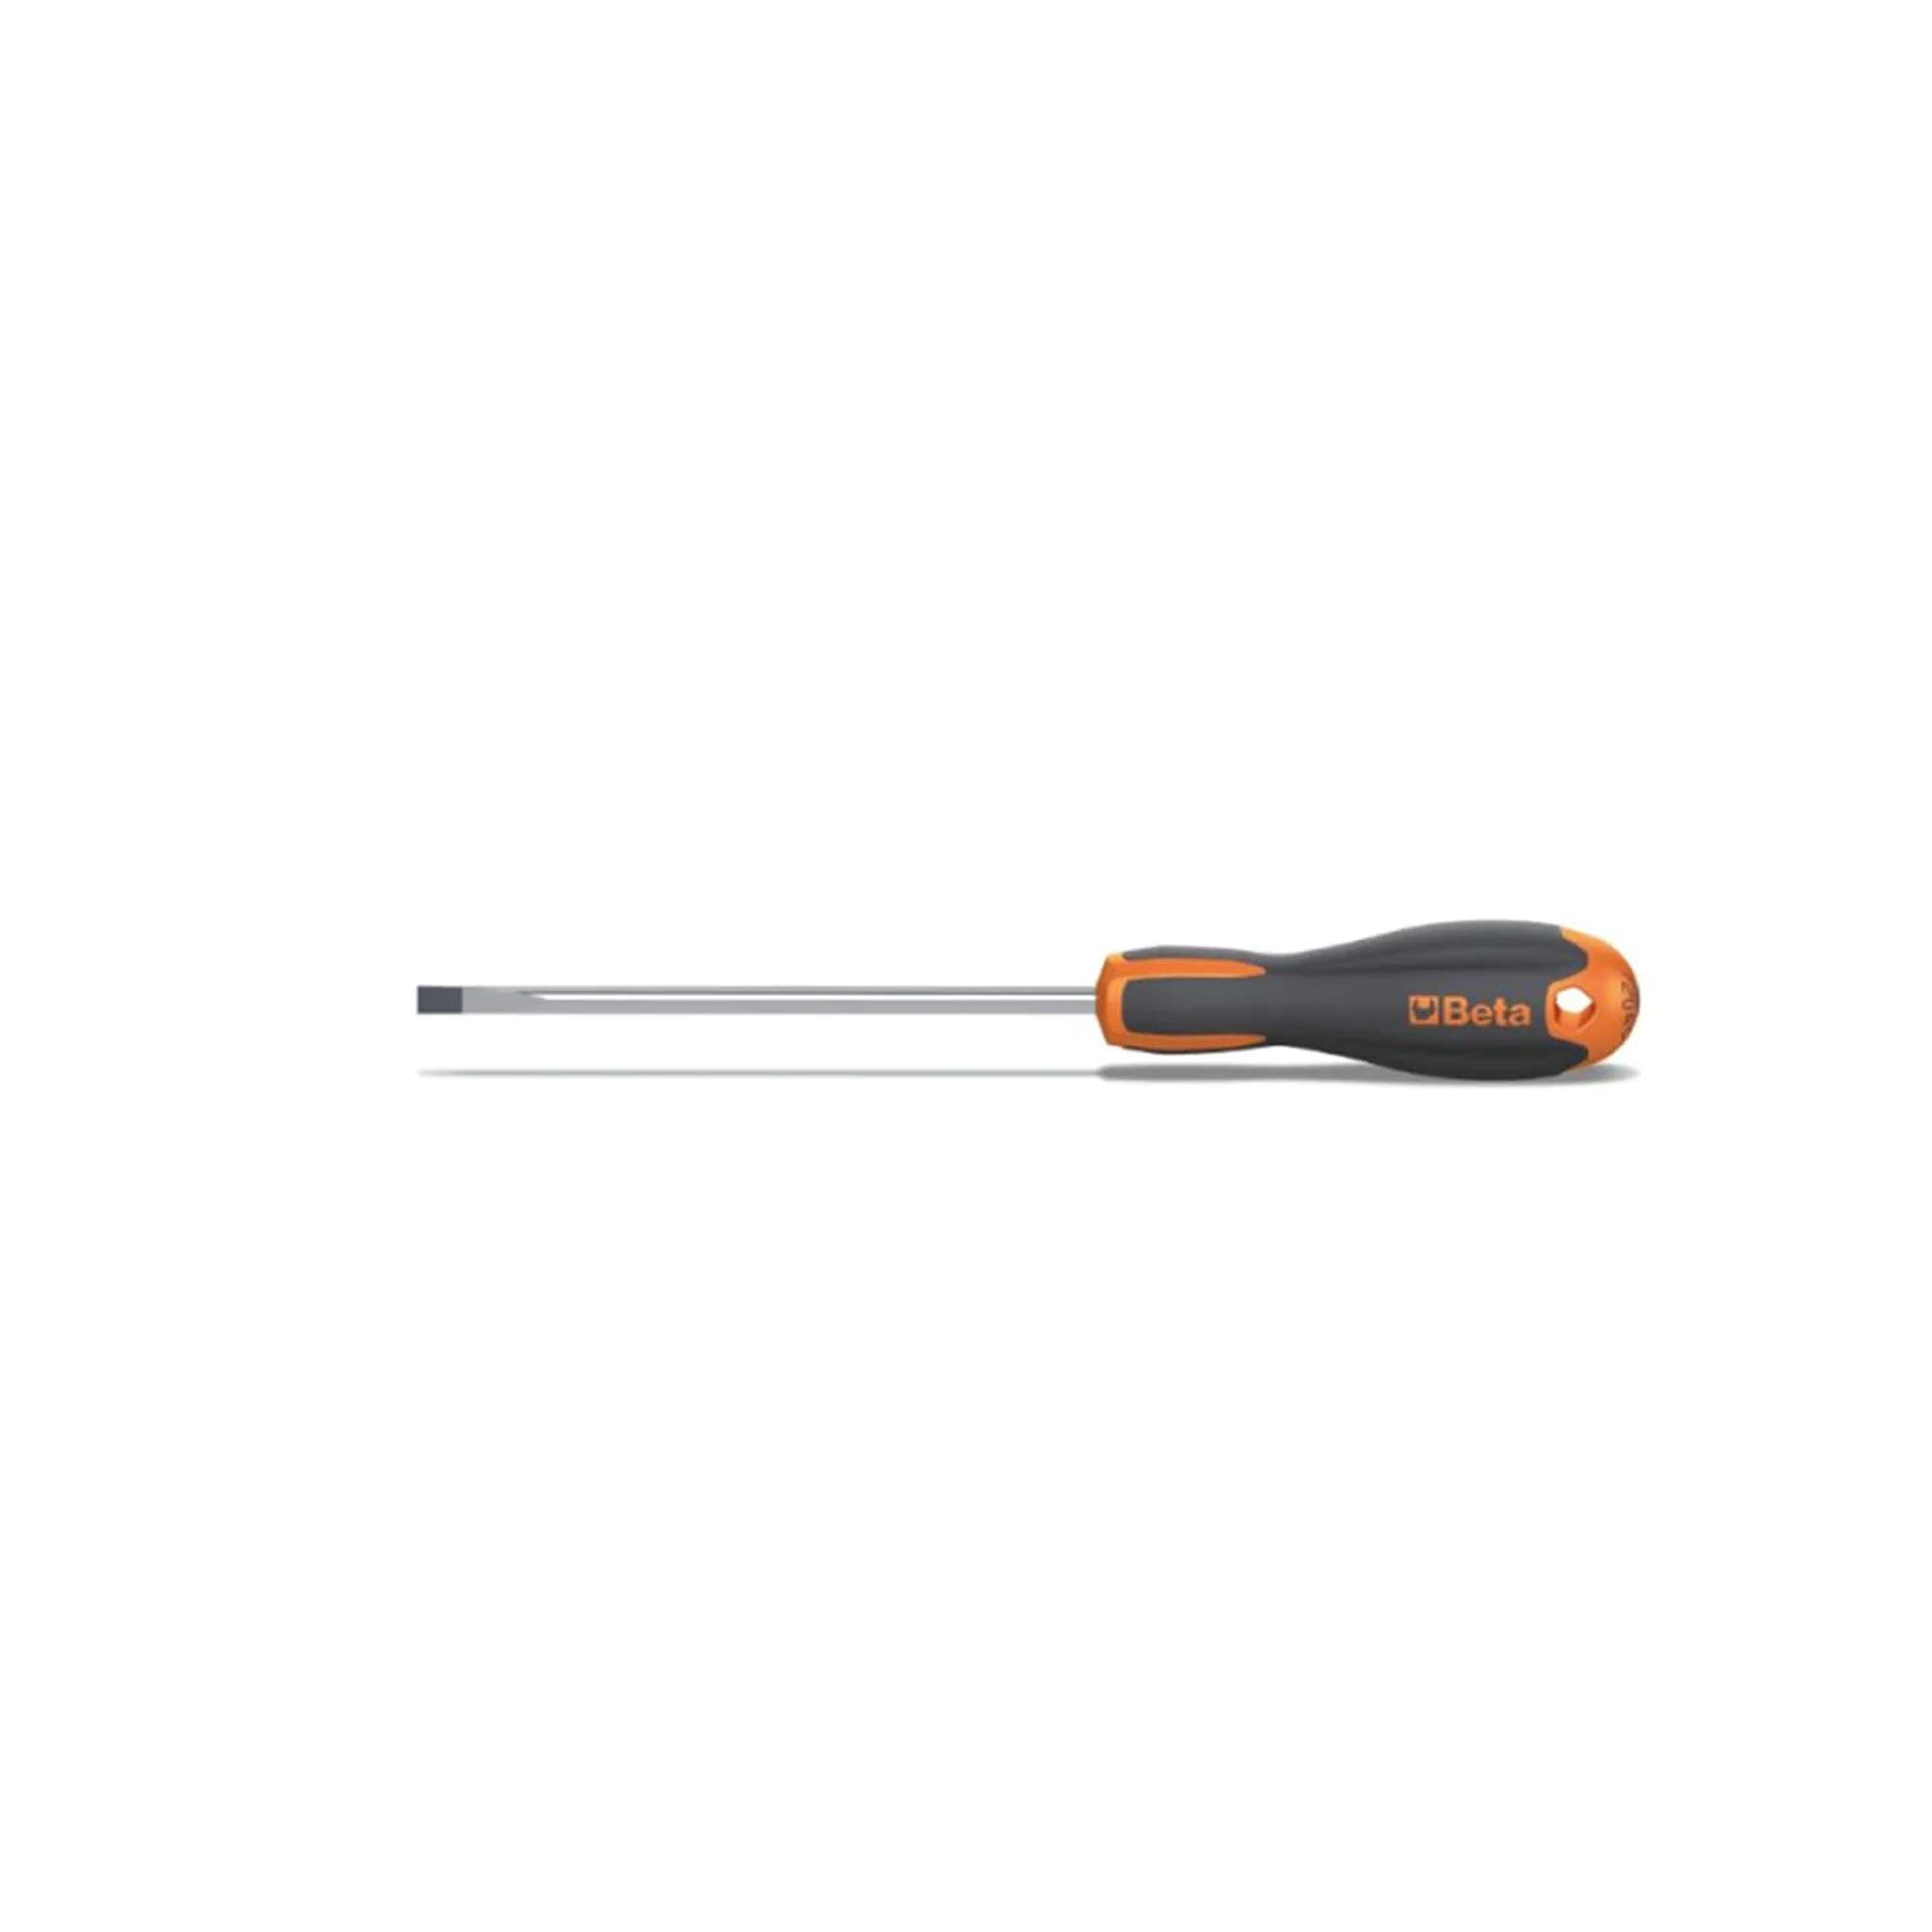 Evox screwdrivers for headless slotted screws, 1x5x150mm - Beta 1204E 5X150